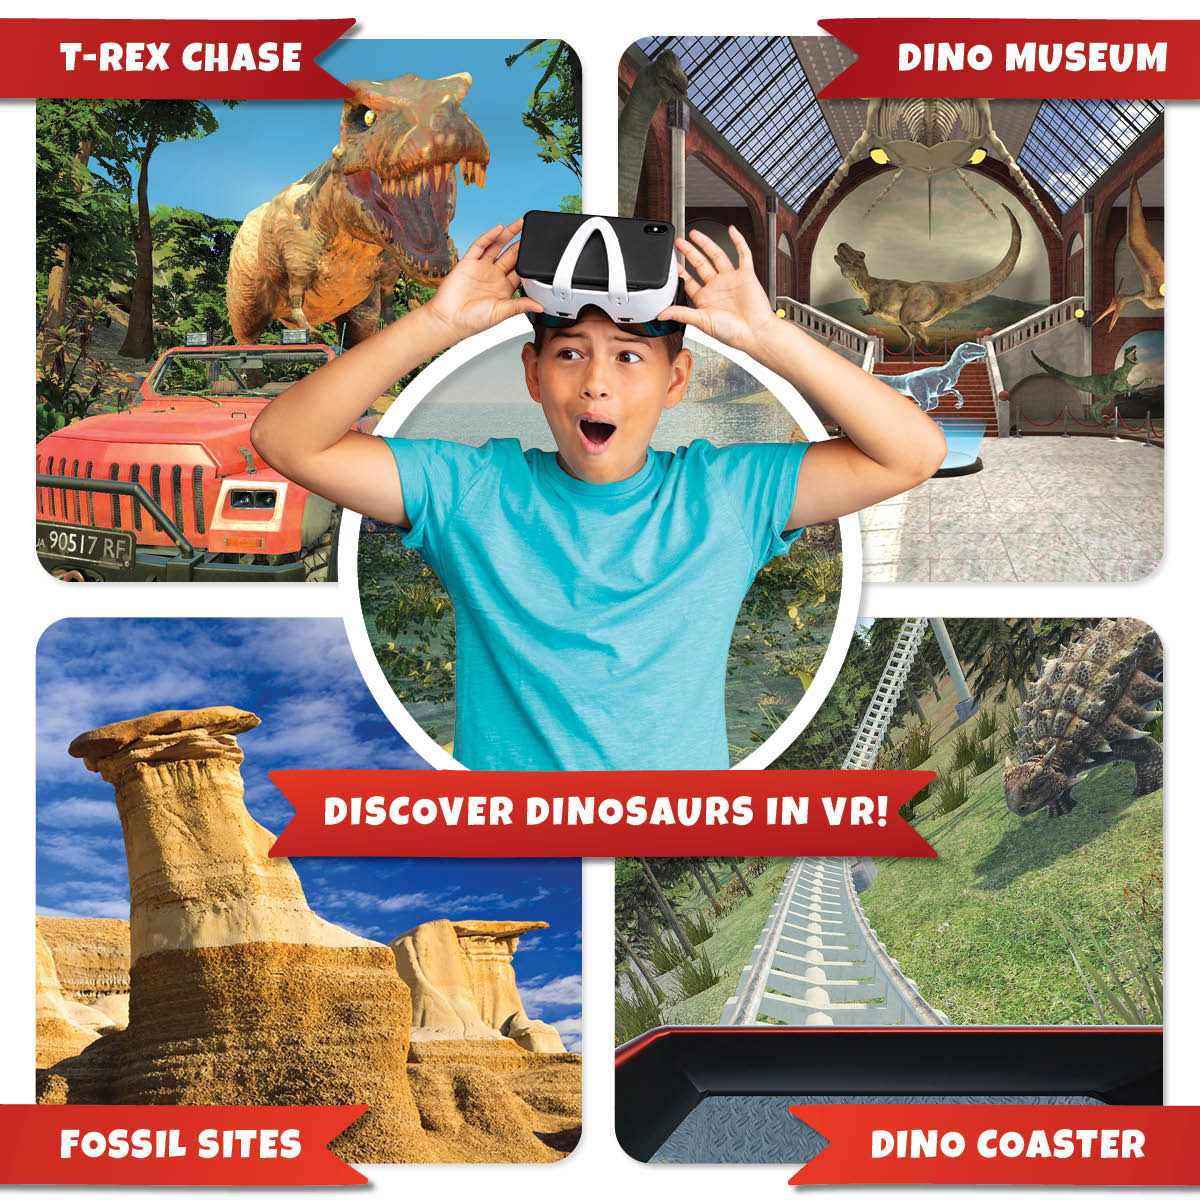 Virtual Reality Dinosaur Exploration Kit - DINO DIG VR